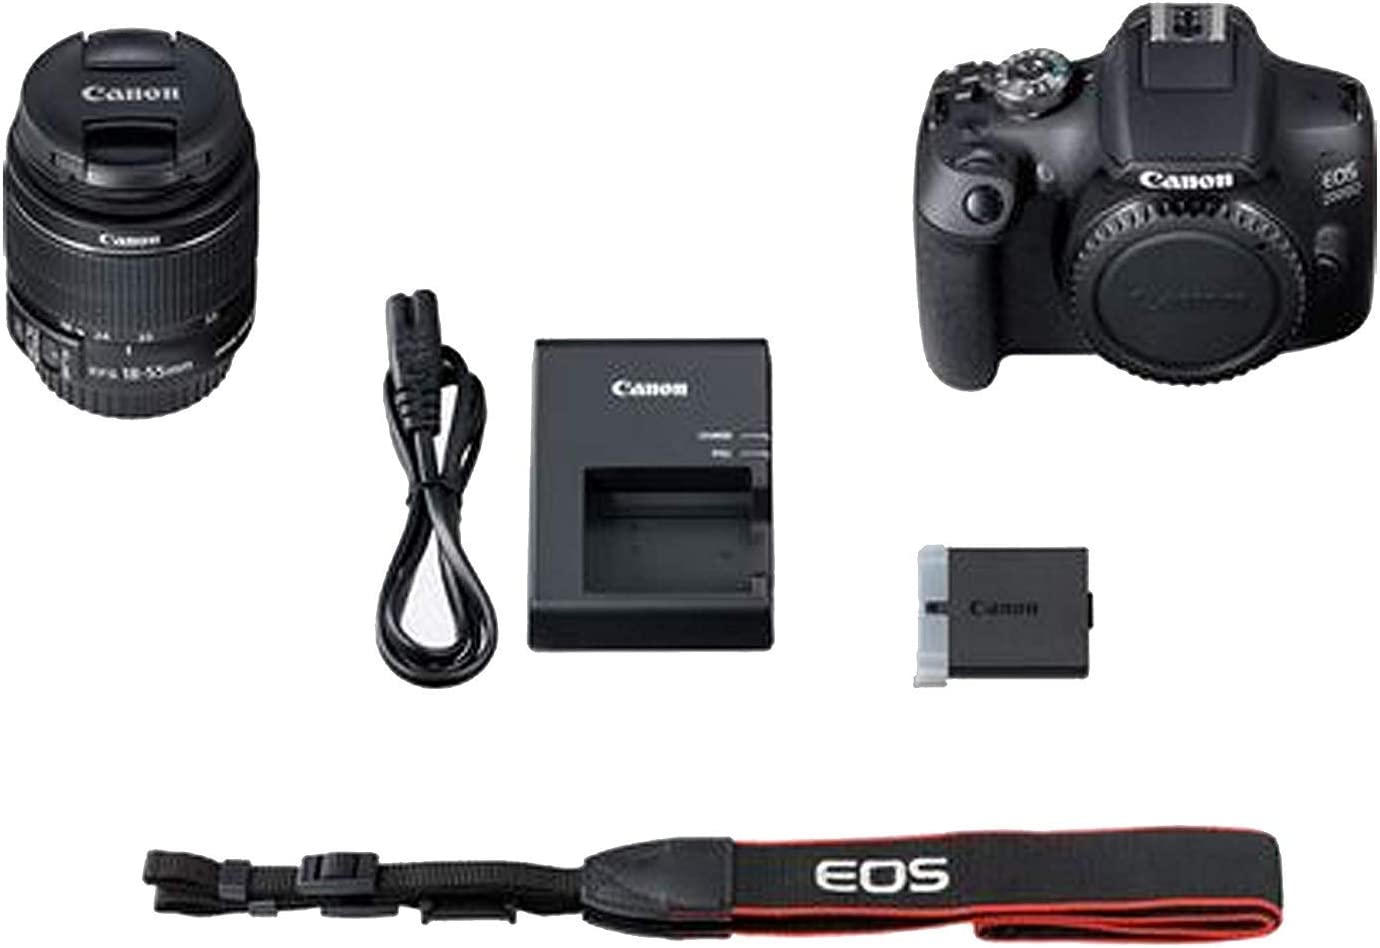 Canon EOS 2000D DSLR Camera with 18-55mm Lens + EOS Bag + Sandisk Ultra 64GB Card (International Model)